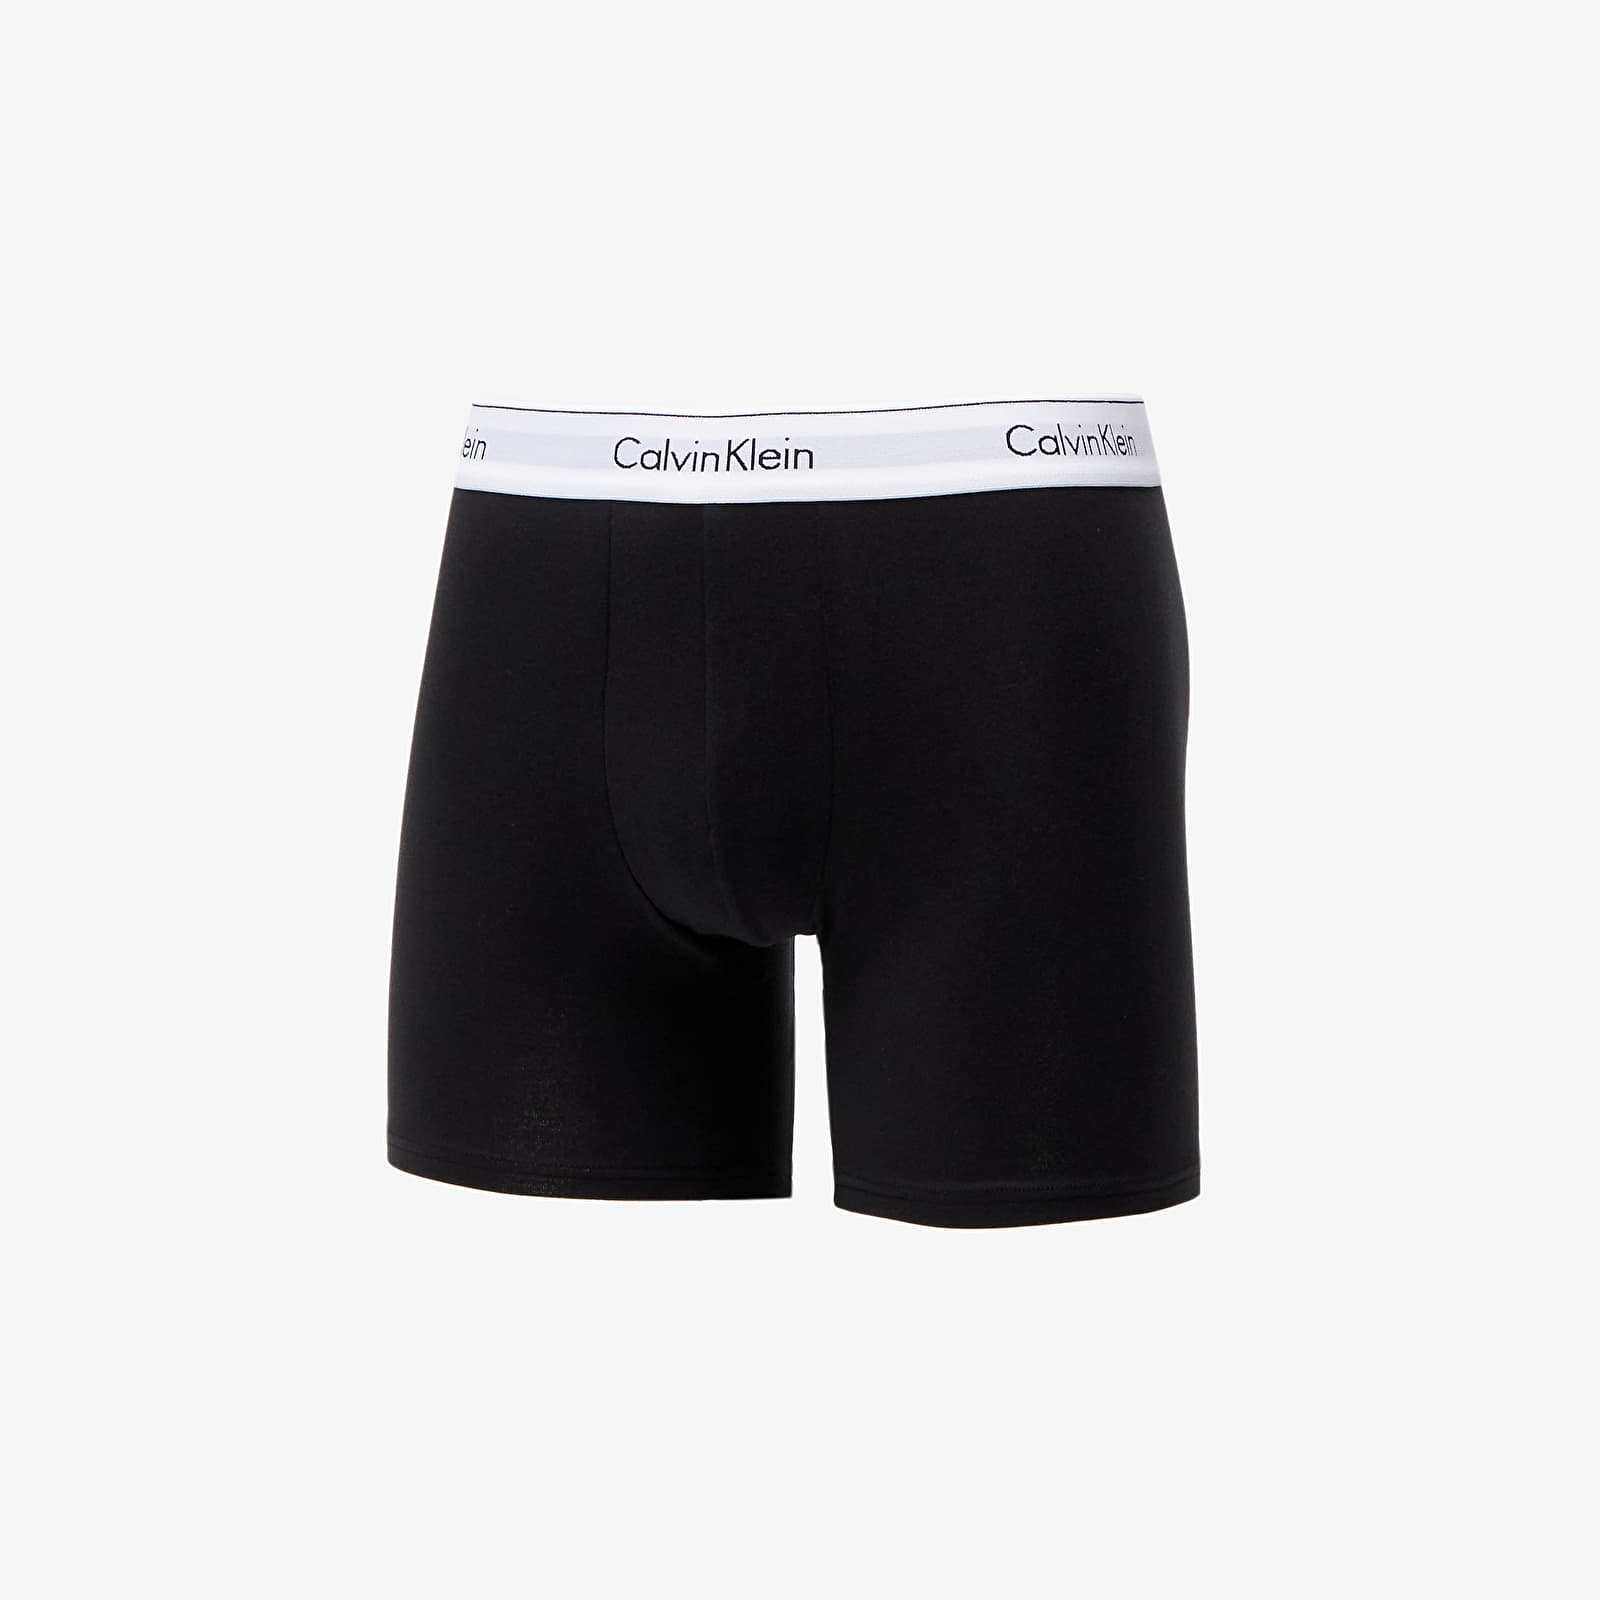 Boxer shorts Calvin Klein Modern Cotton Stretch Boxer Brief 3-Pack